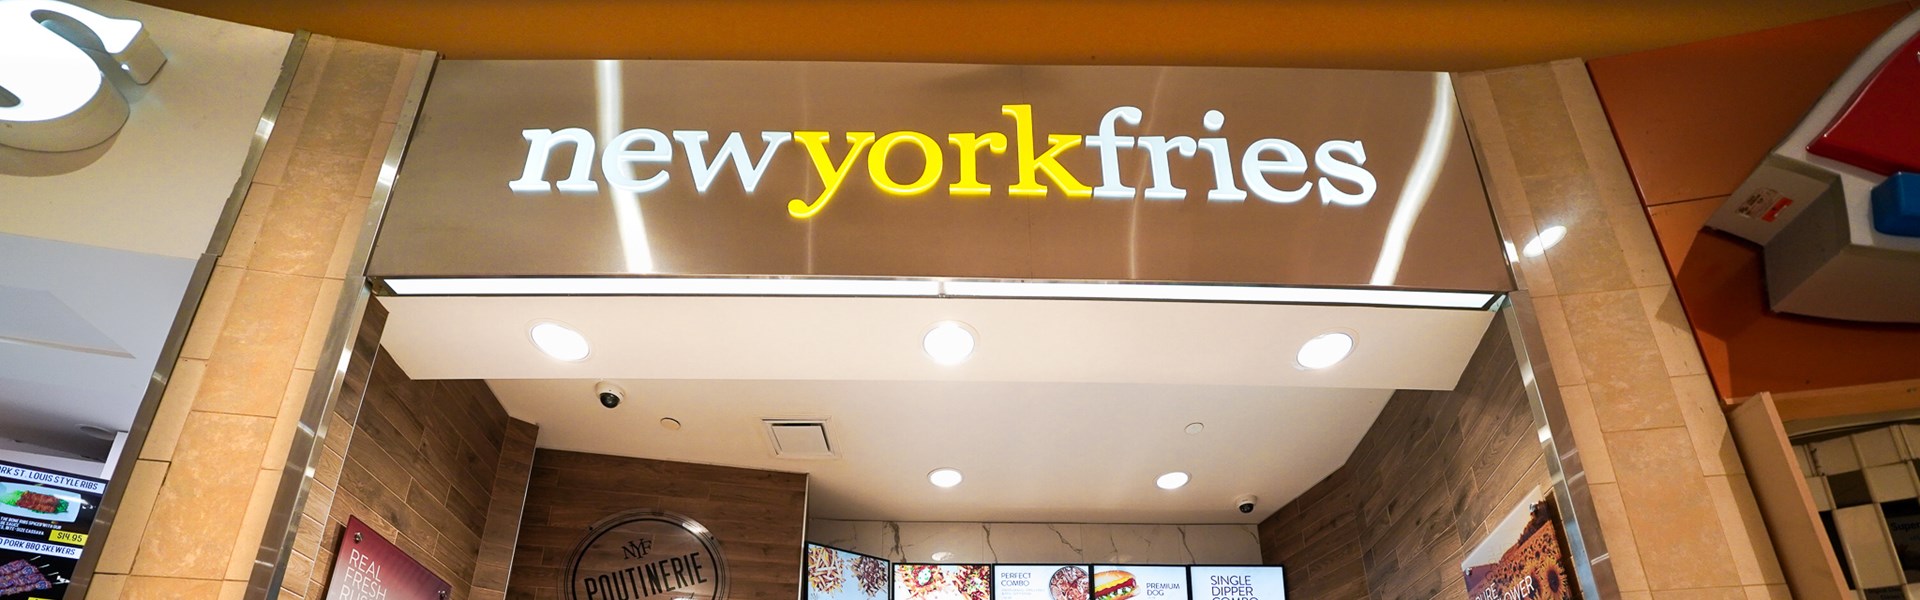 New York Fries - Phase I